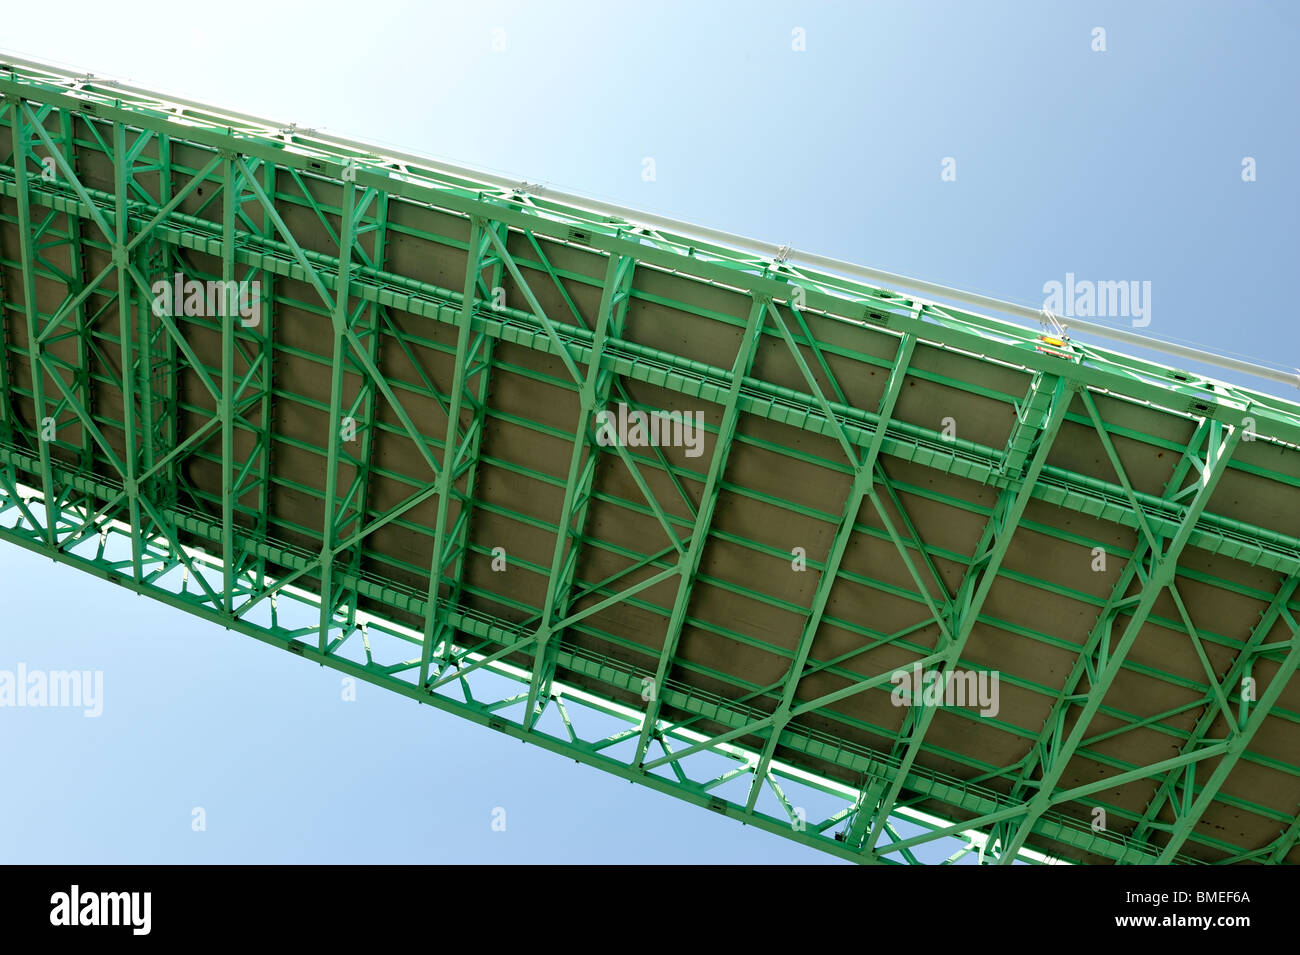 Skandinavien, Schweden, Göteborg, Blick auf Brücke gegen Himmel, niedrigen Winkel Ansicht Stockfoto